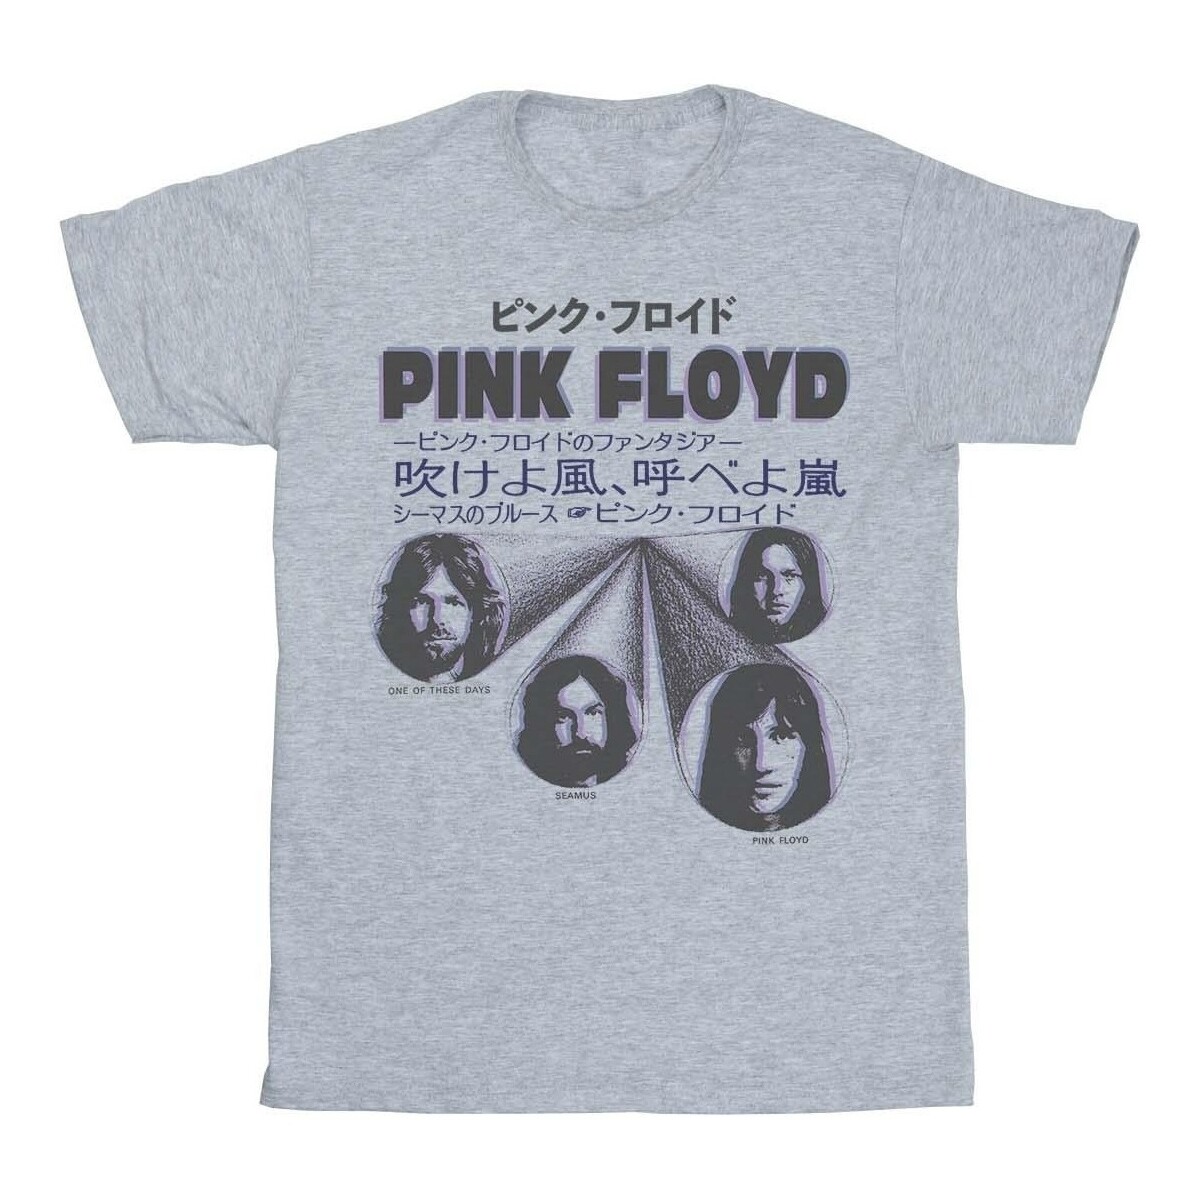 Vêtements Fille T-shirts manches longues Pink Floyd Japanese Cover Gris